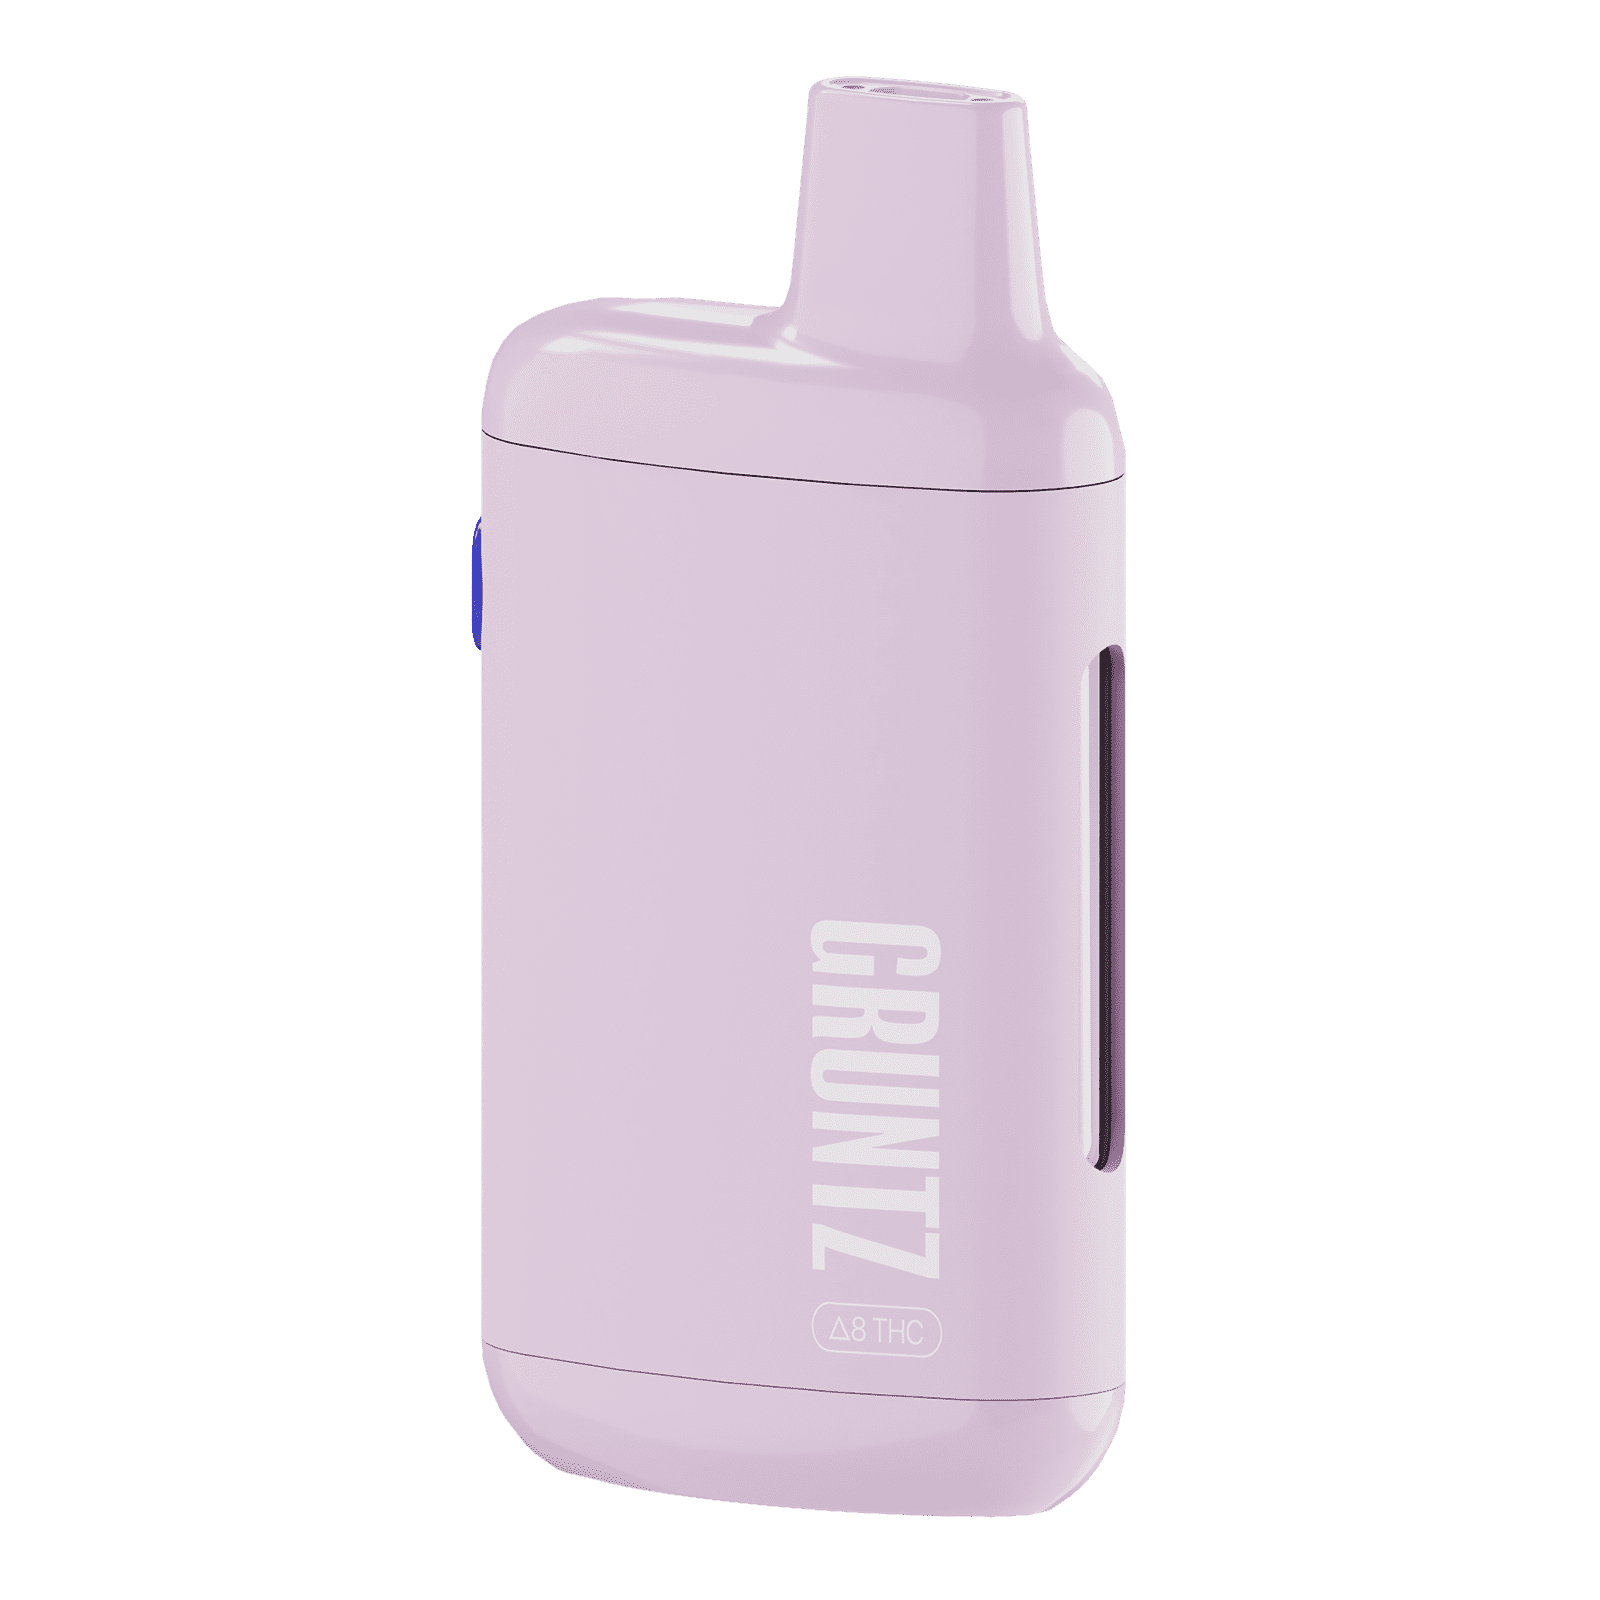 Puff Bar Delta 8 THC Gruntz Disposable Device